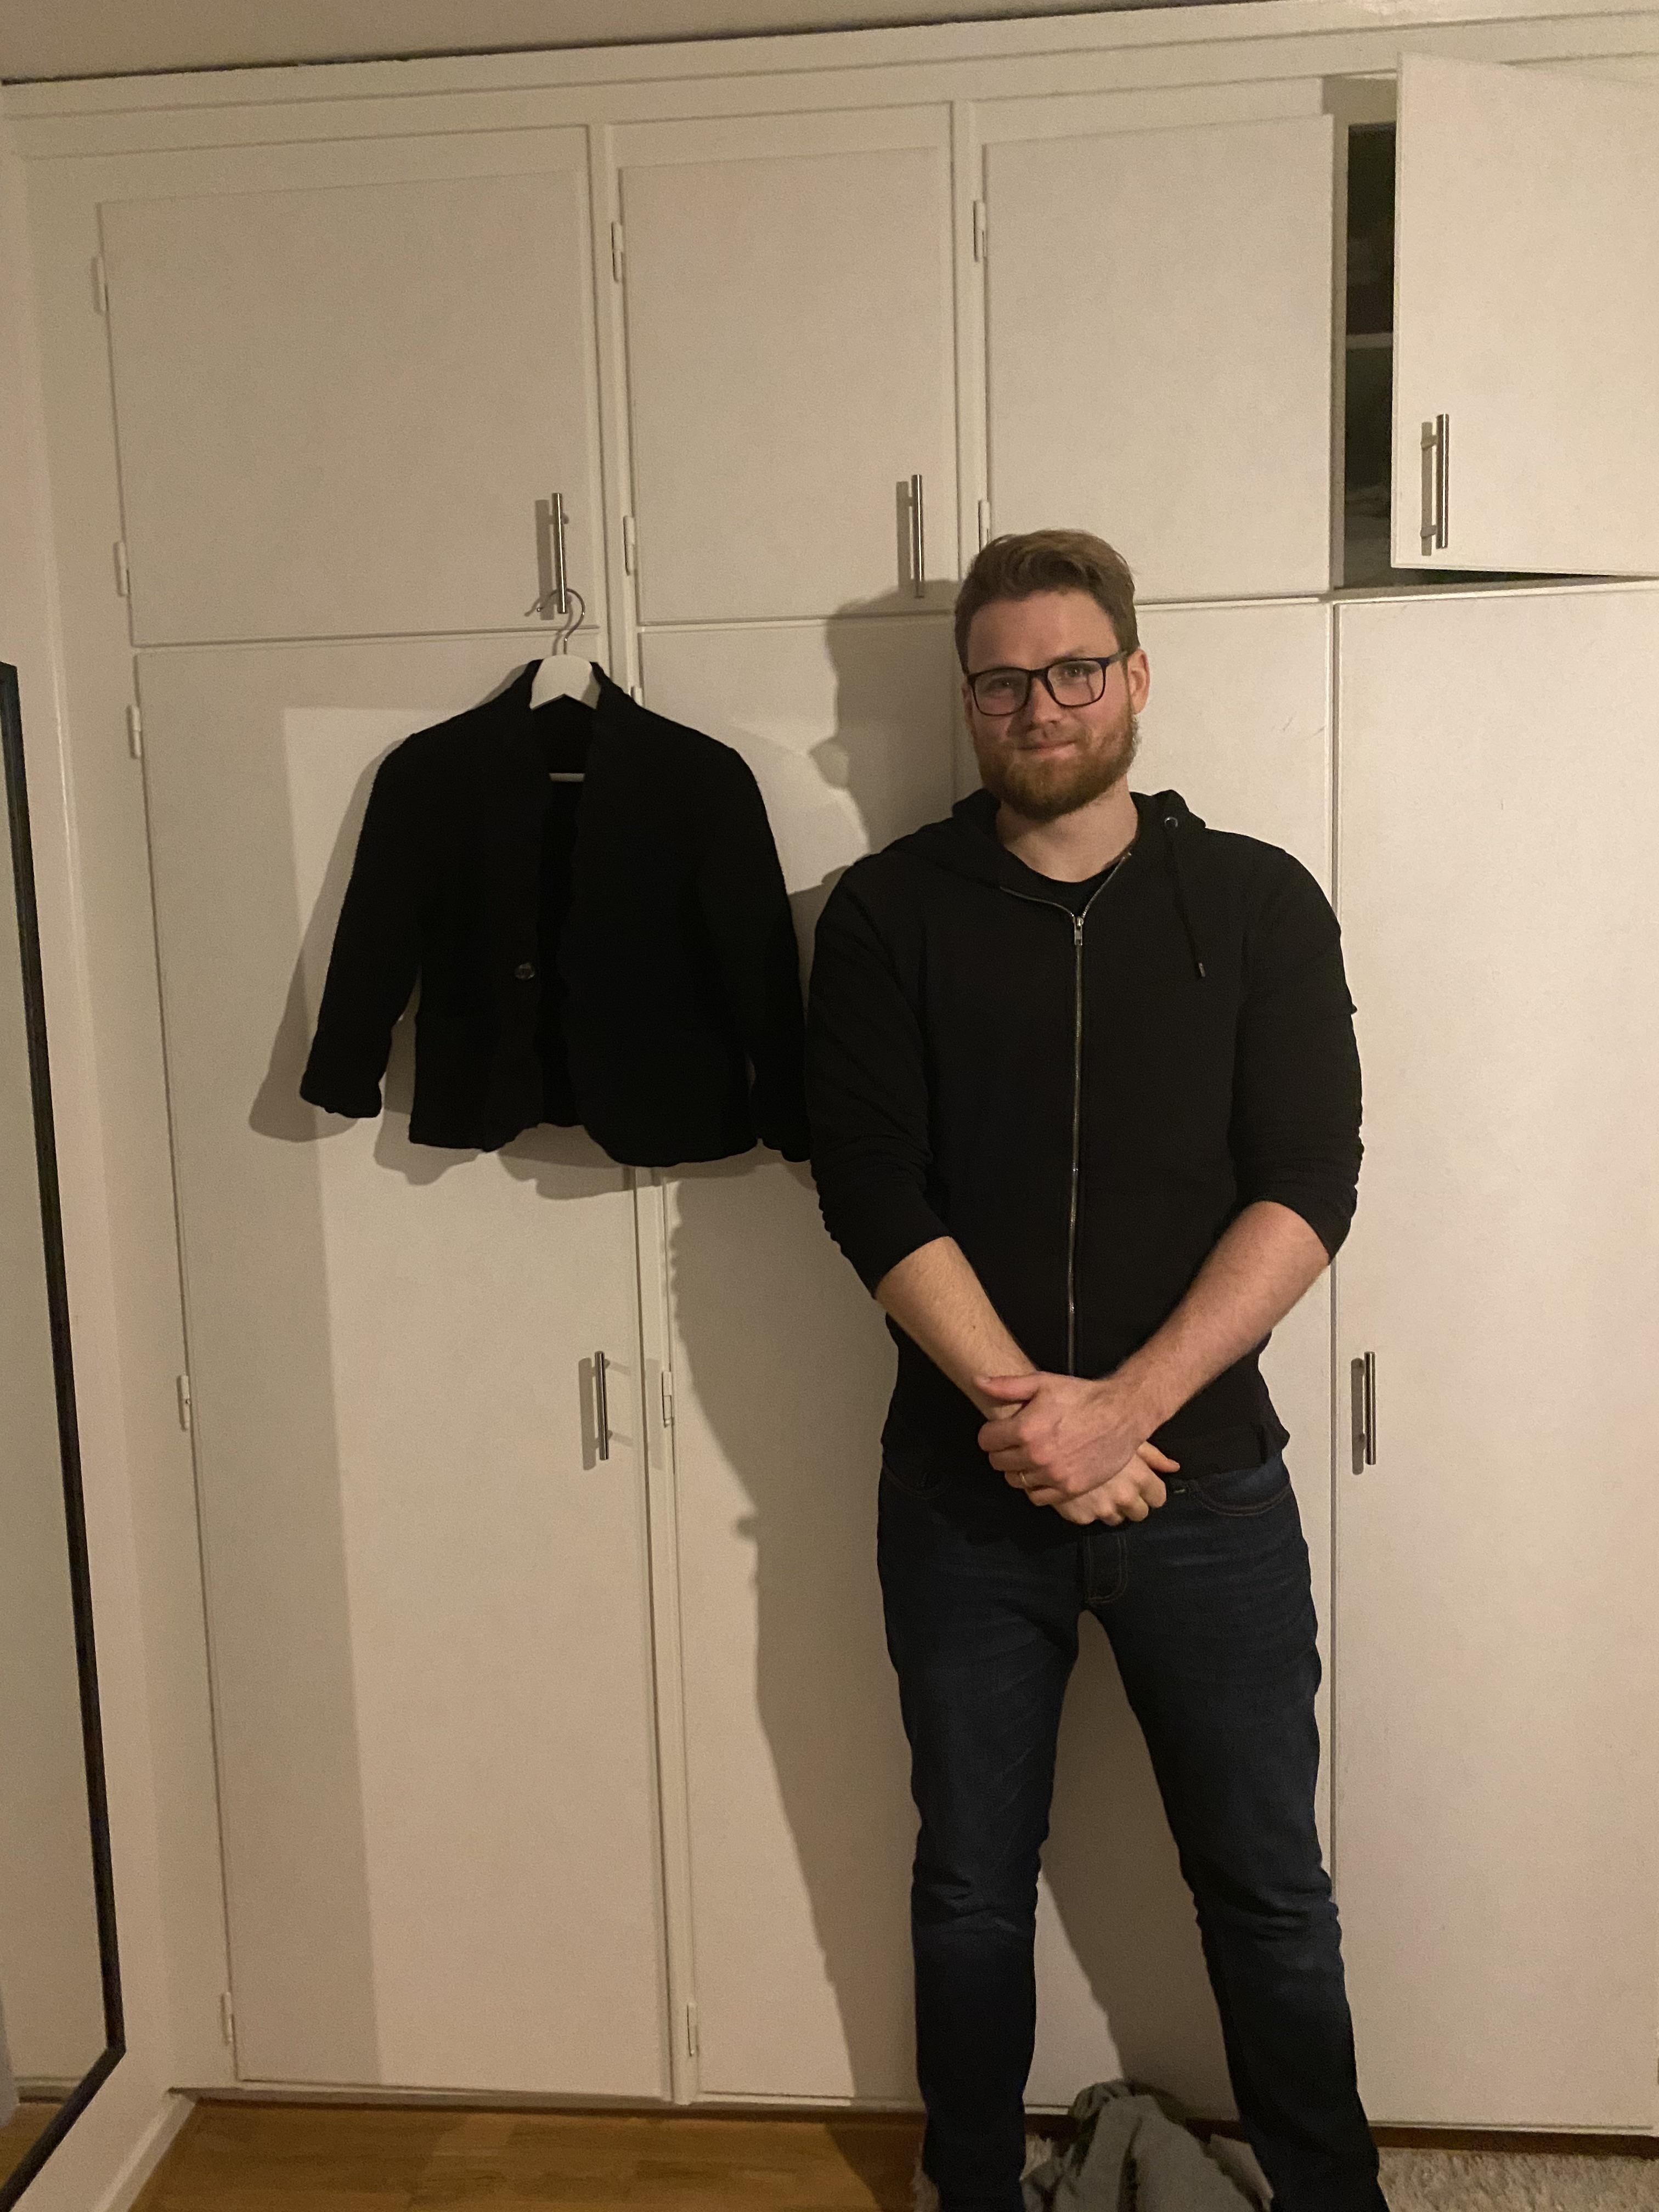 I’ve accidentally shrunk my husbands jacket. Husband for scale